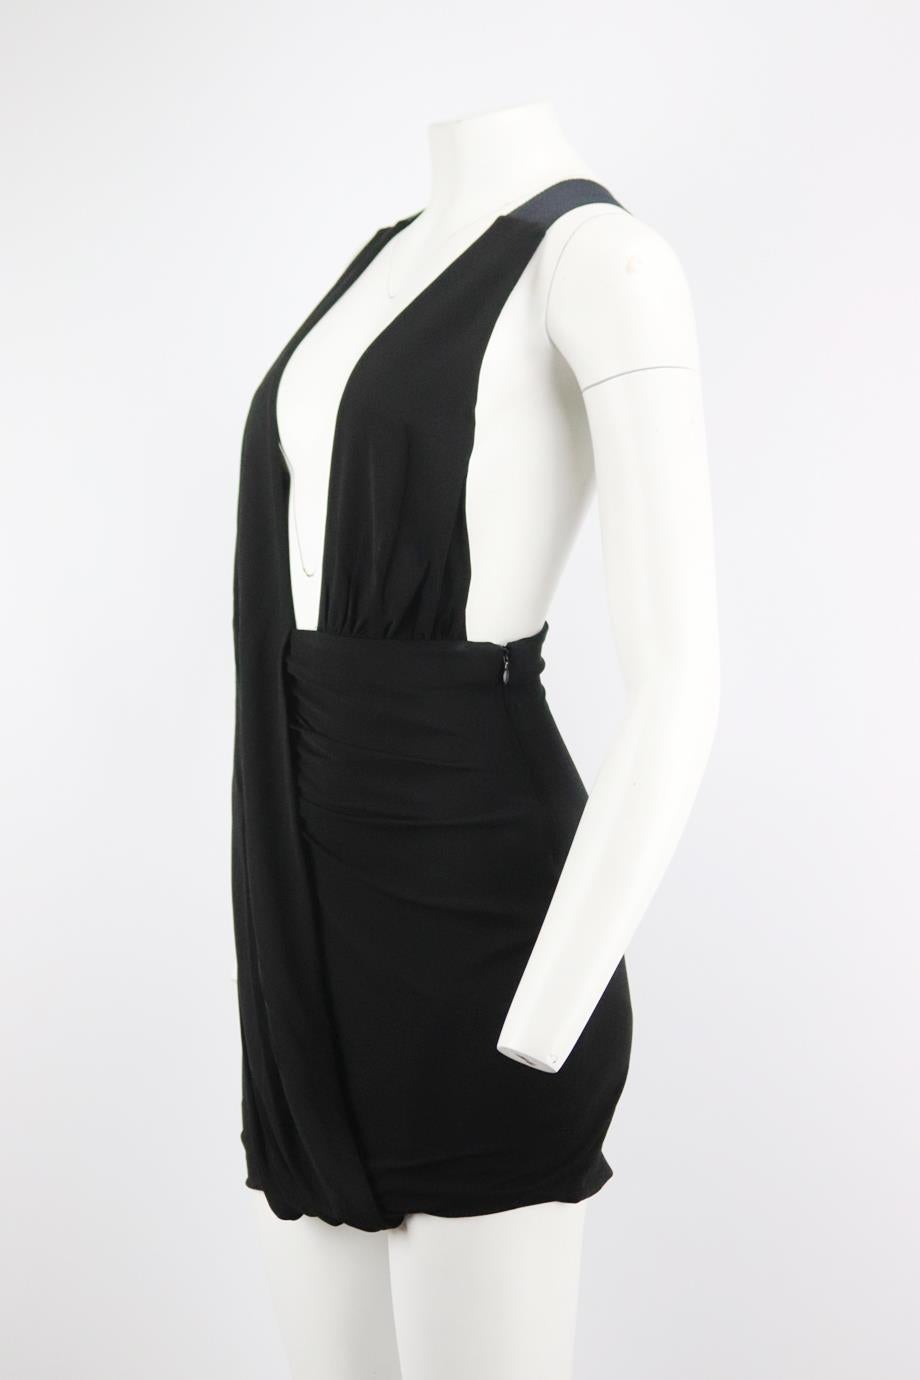 Black Anthony Vaccarello Ruched Jersey Mini Dress Fr 36 Uk 8